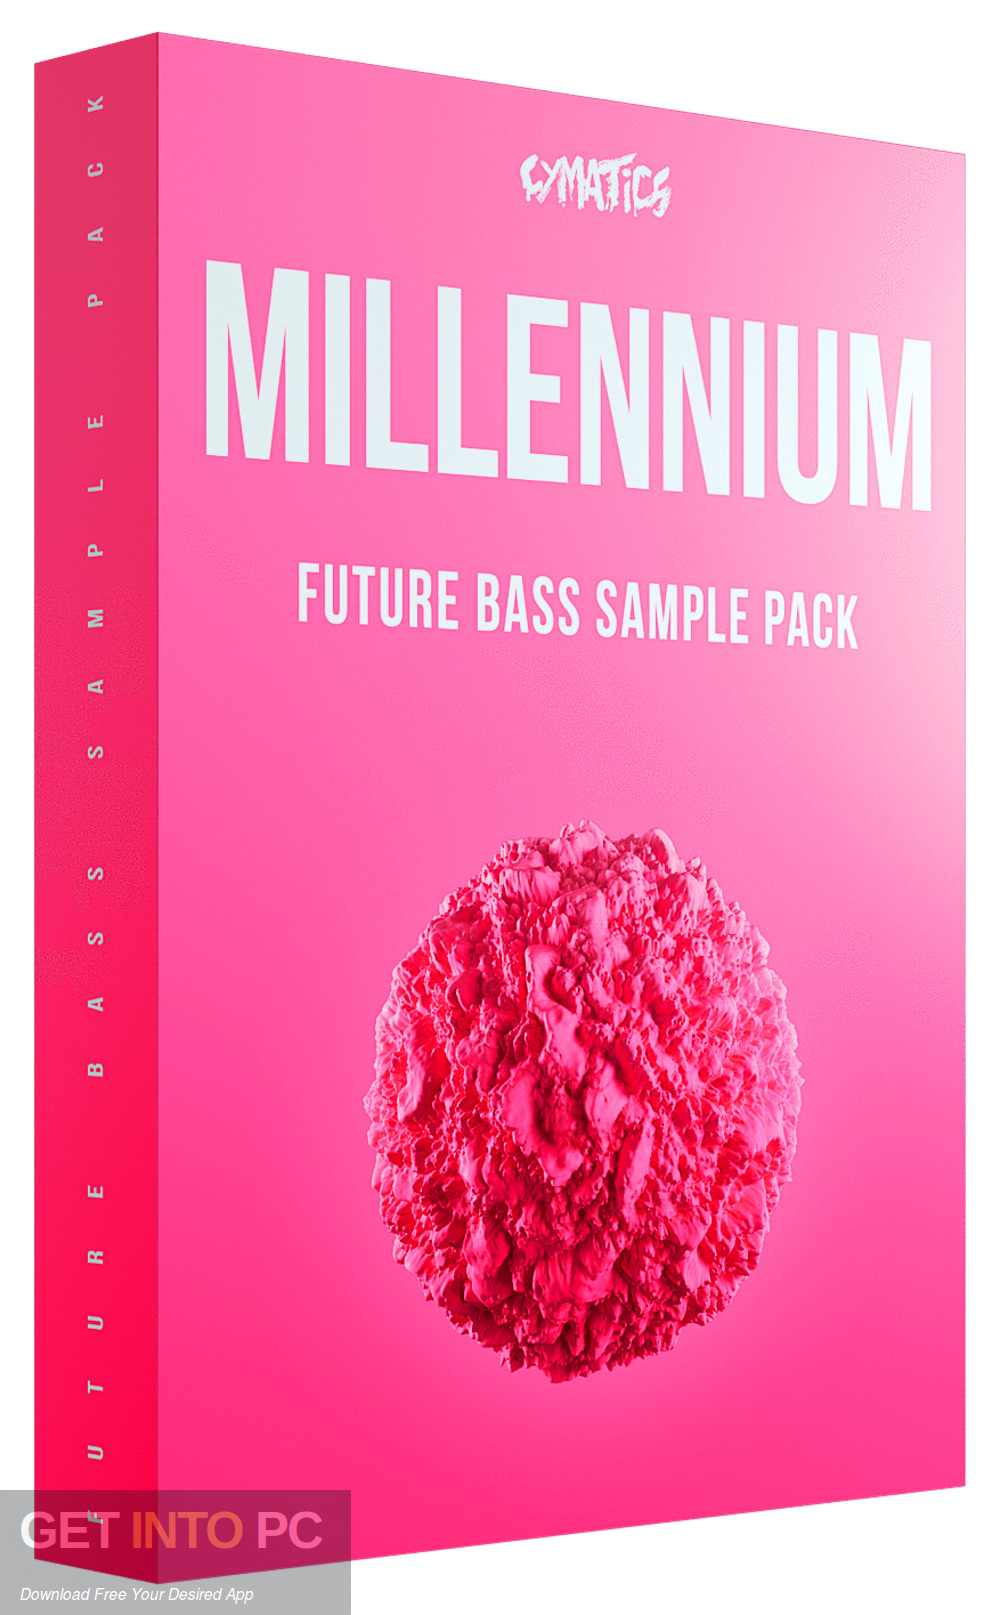 Cymatics - Millennium - Future Bass Sample Pack Free Download-GetintoPC.com